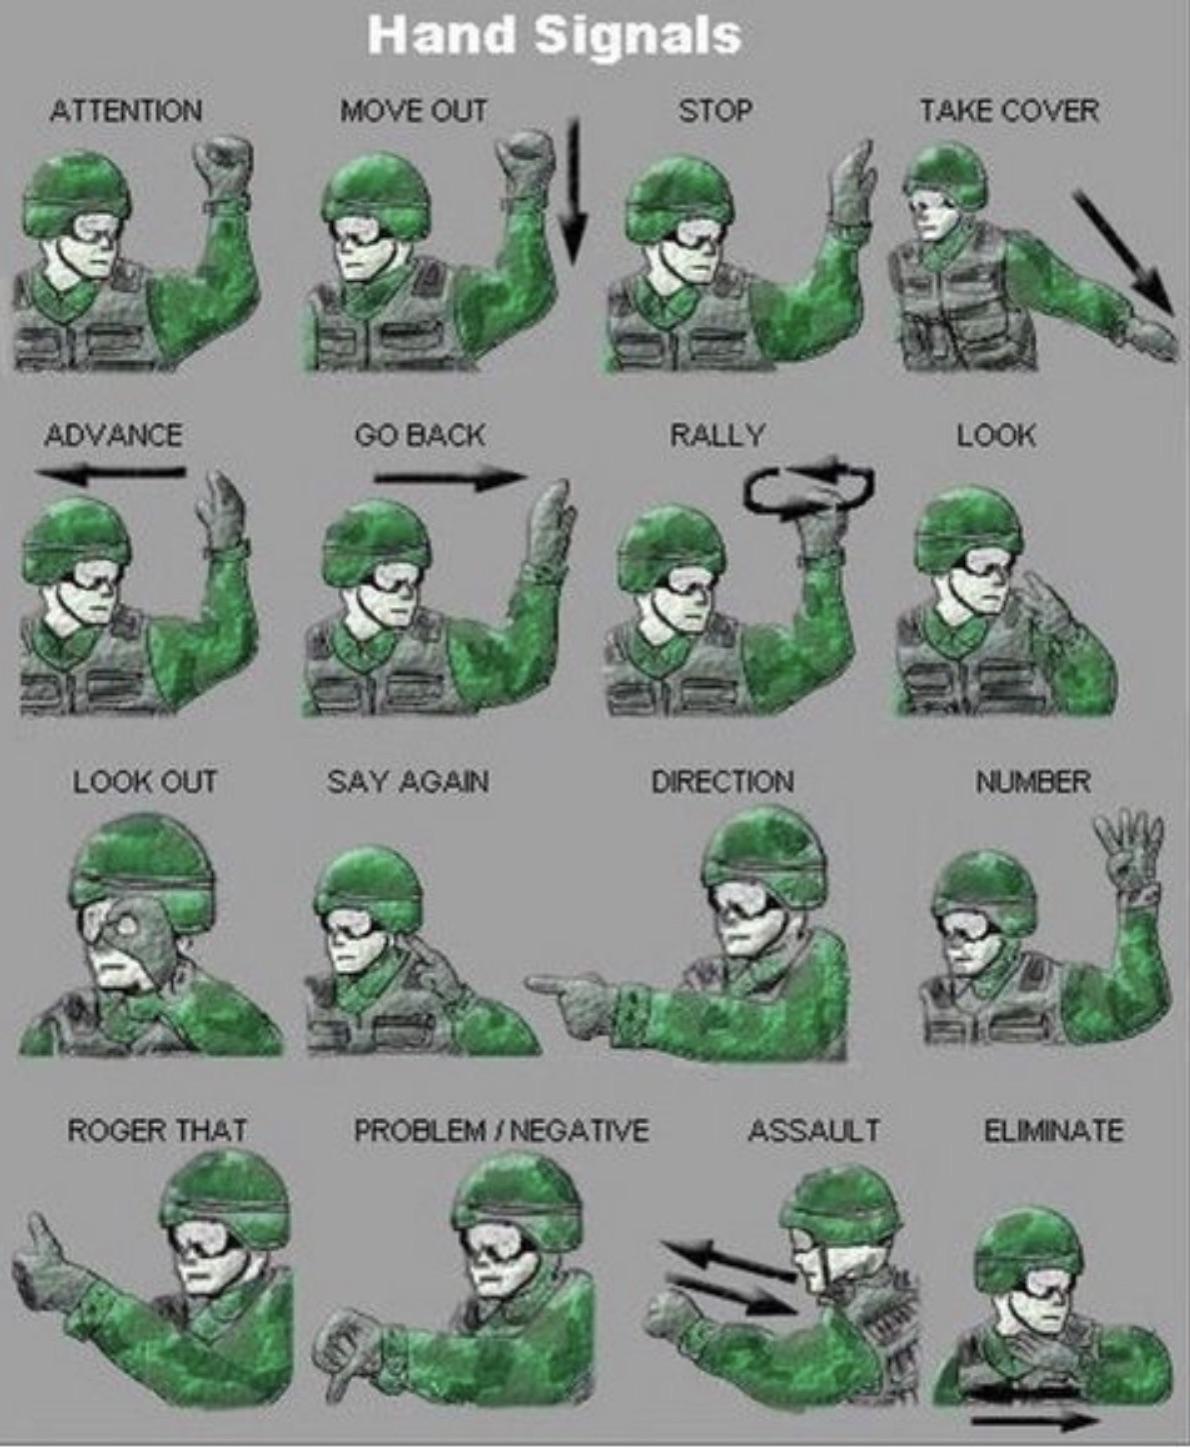 Military hand signals.